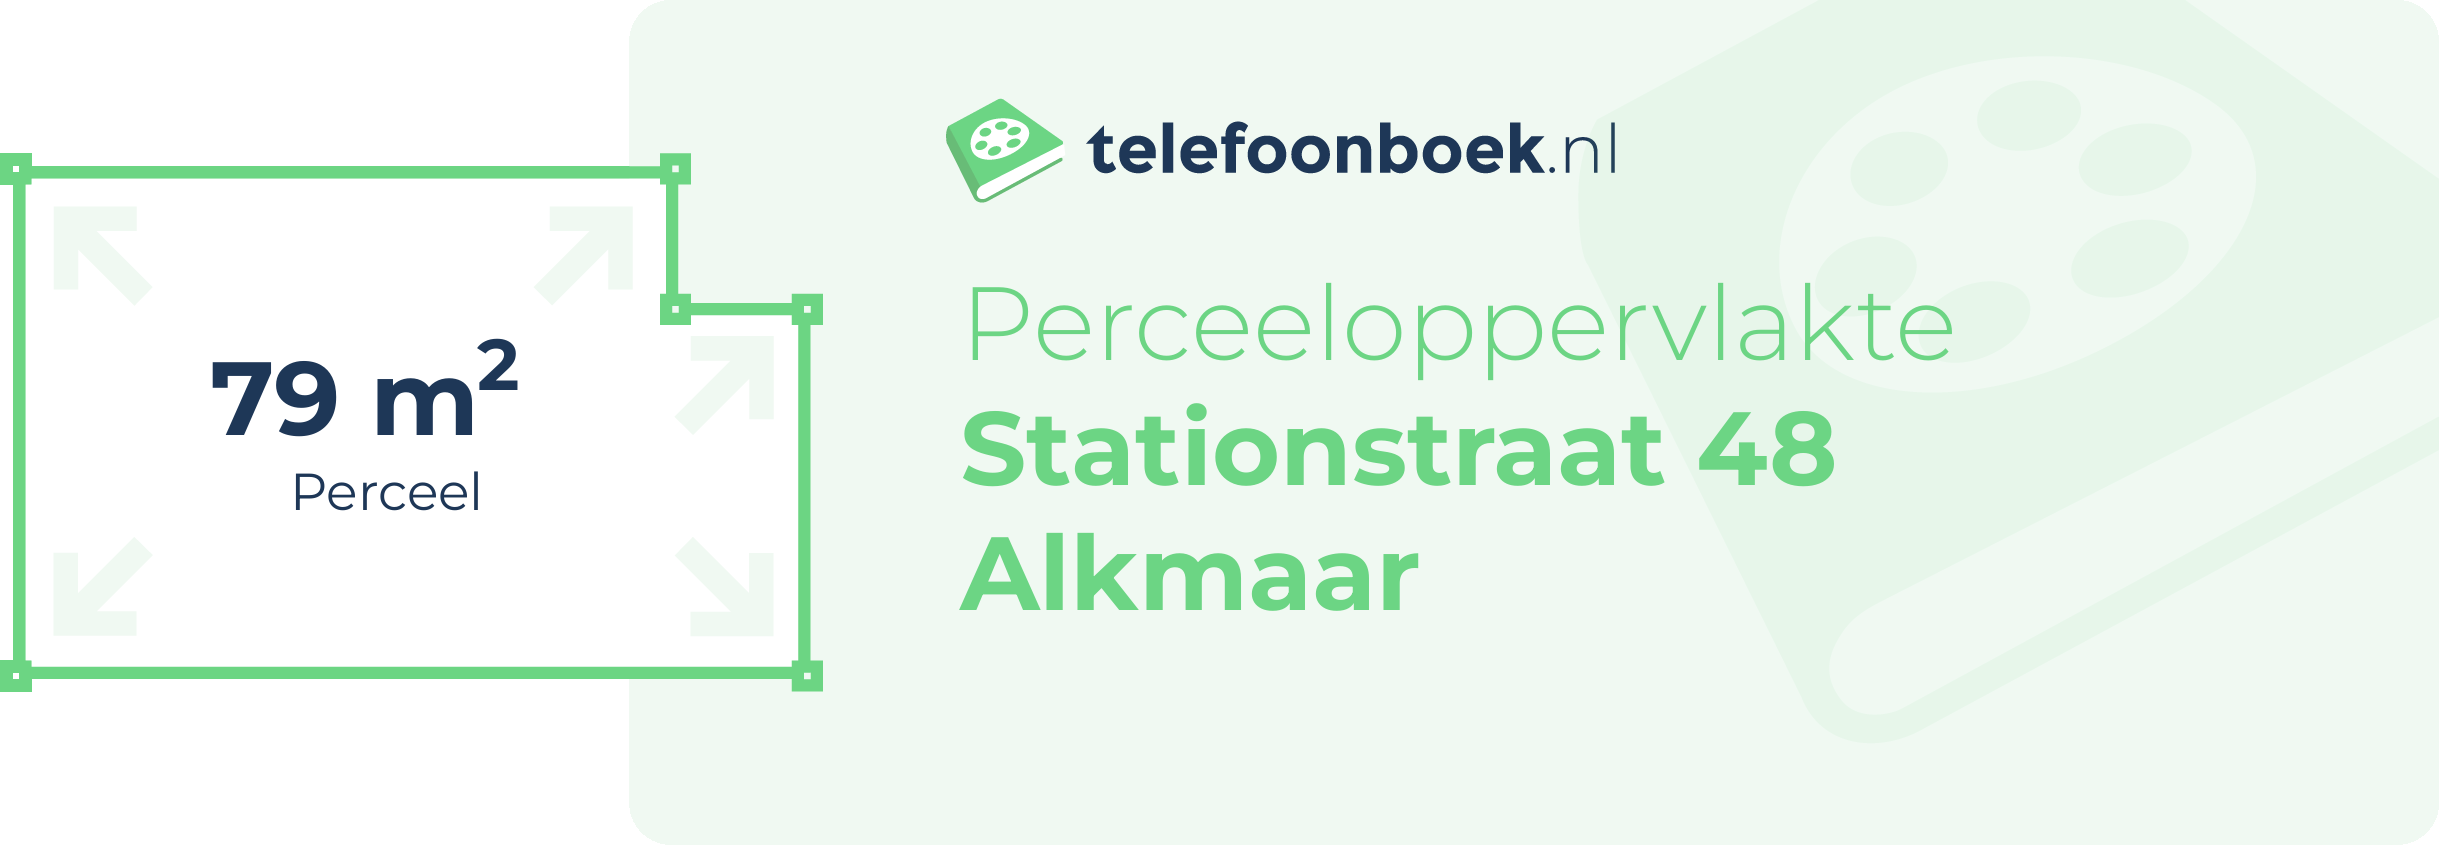 Perceeloppervlakte Stationstraat 48 Alkmaar